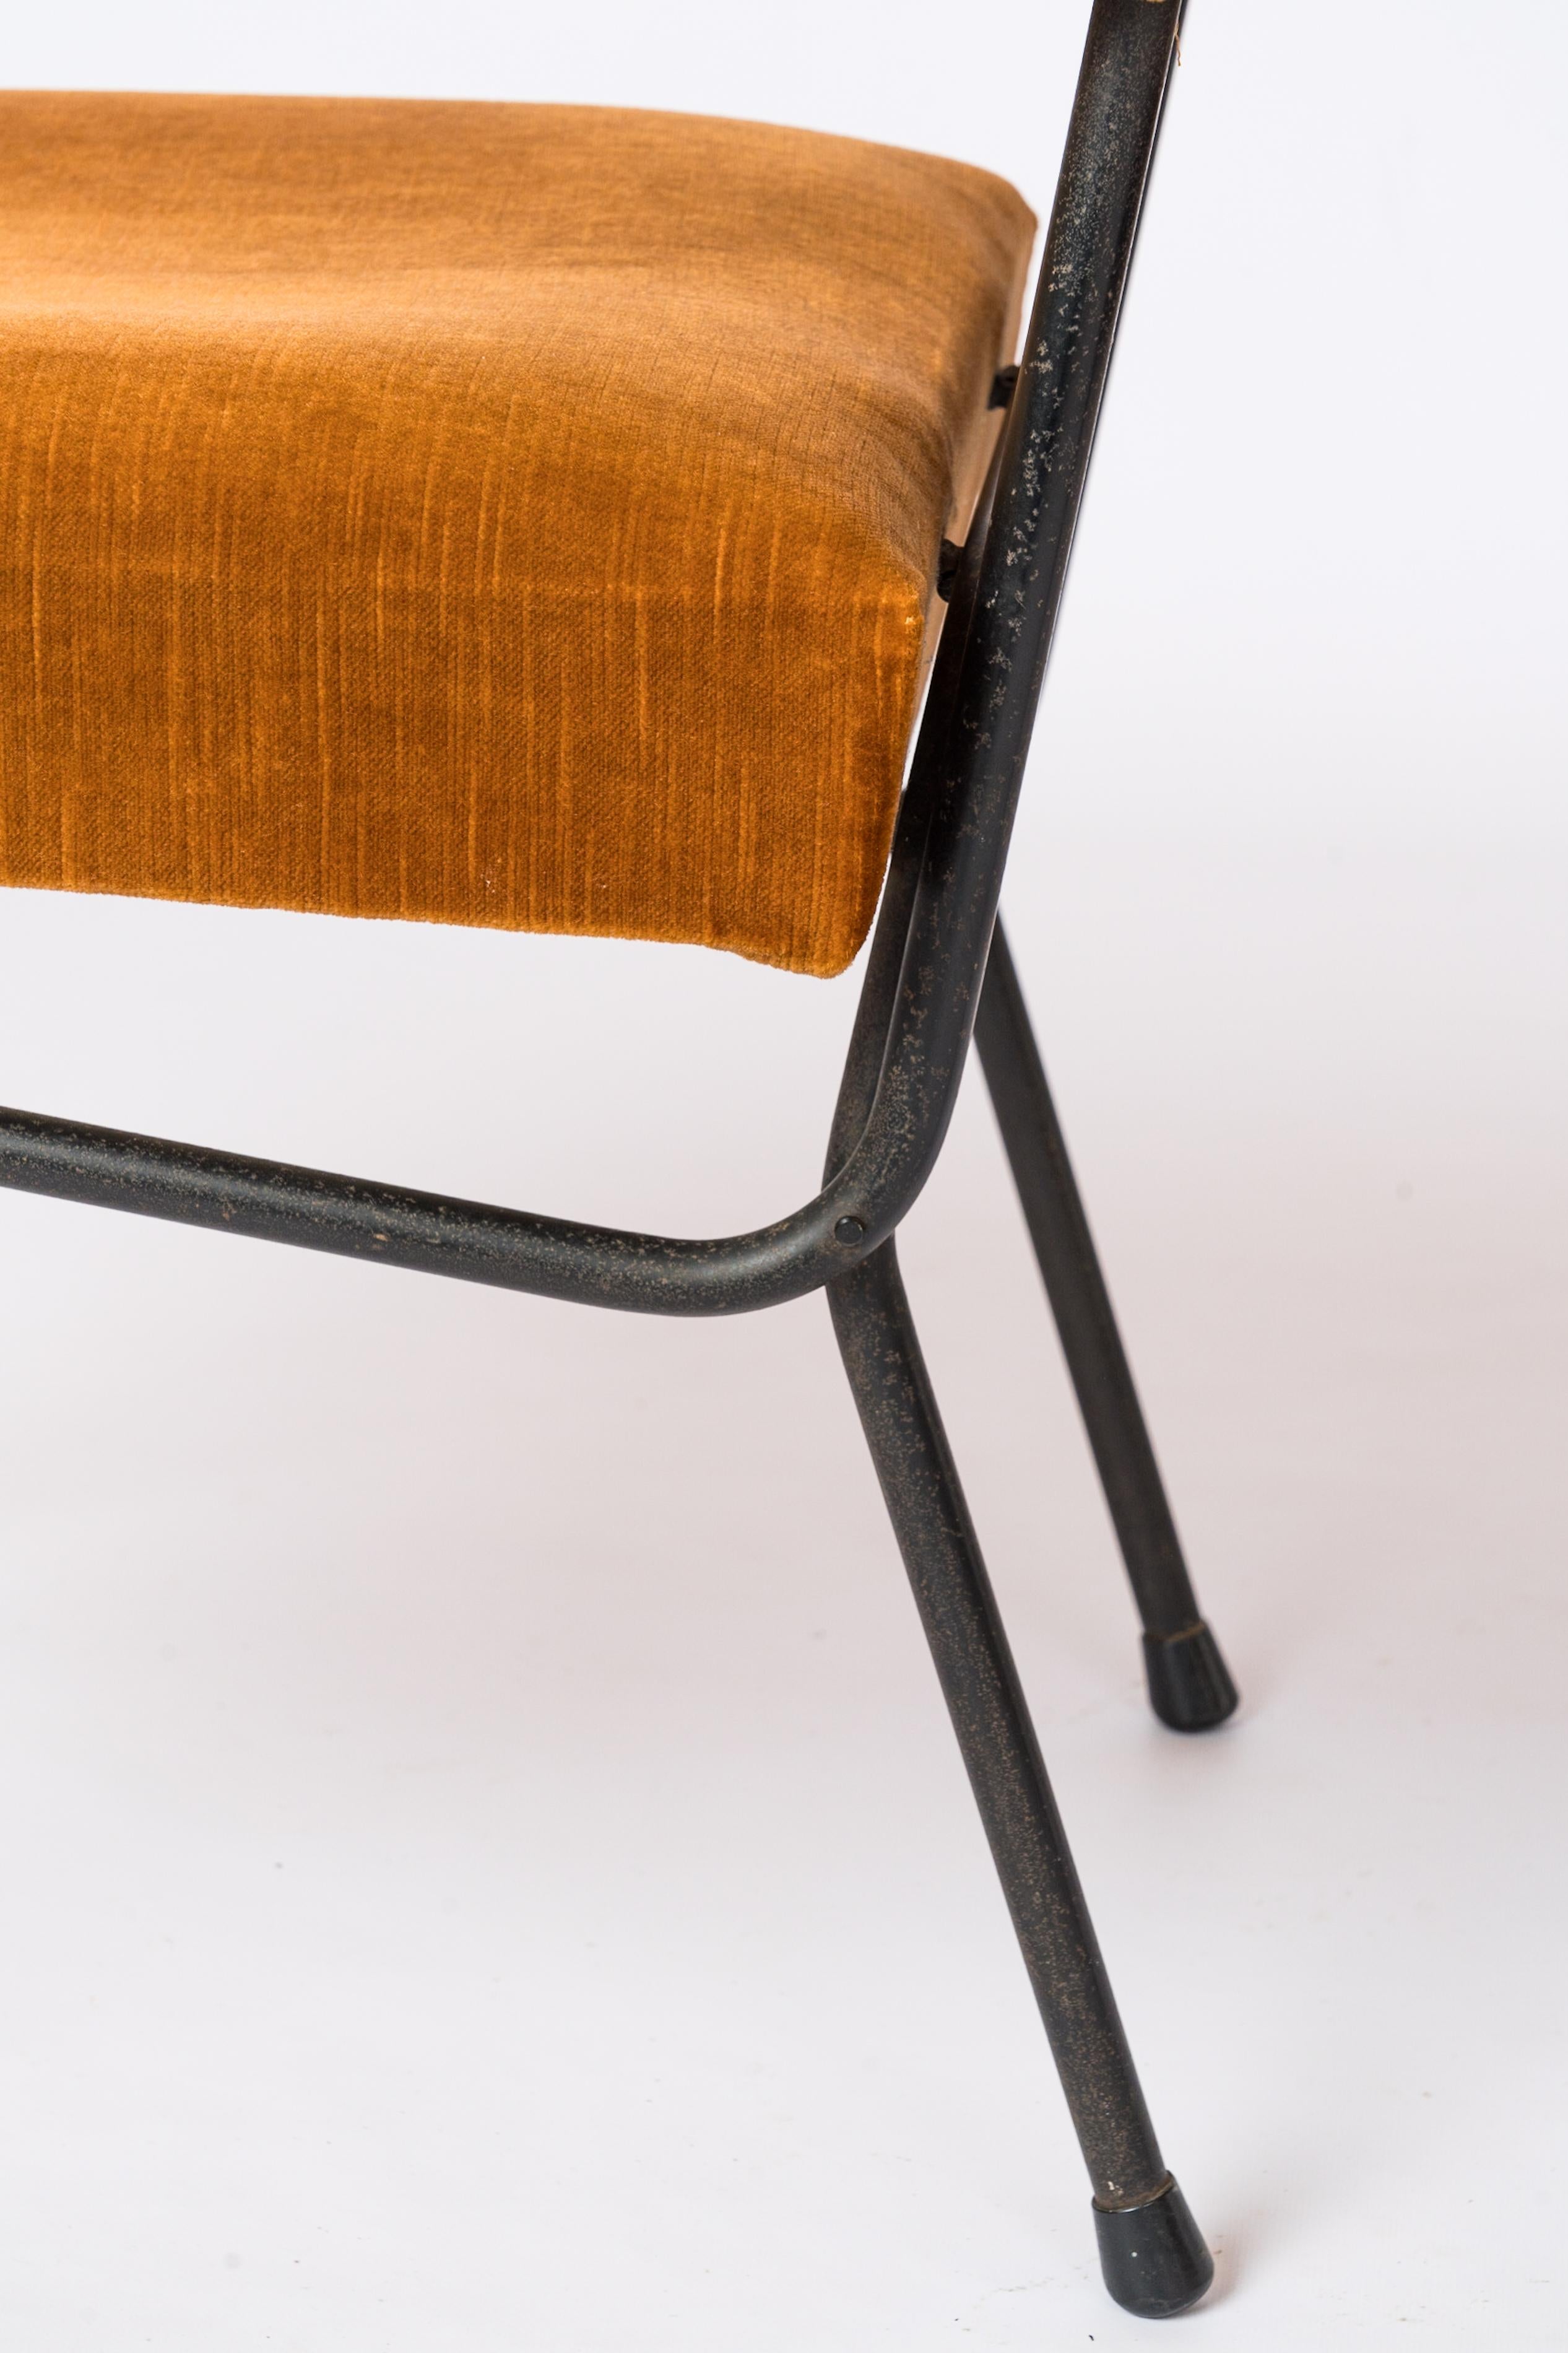 Steel Pair of Marigold Velvet Adjustable Chairs att. Pierre Guariche - France 1960's For Sale